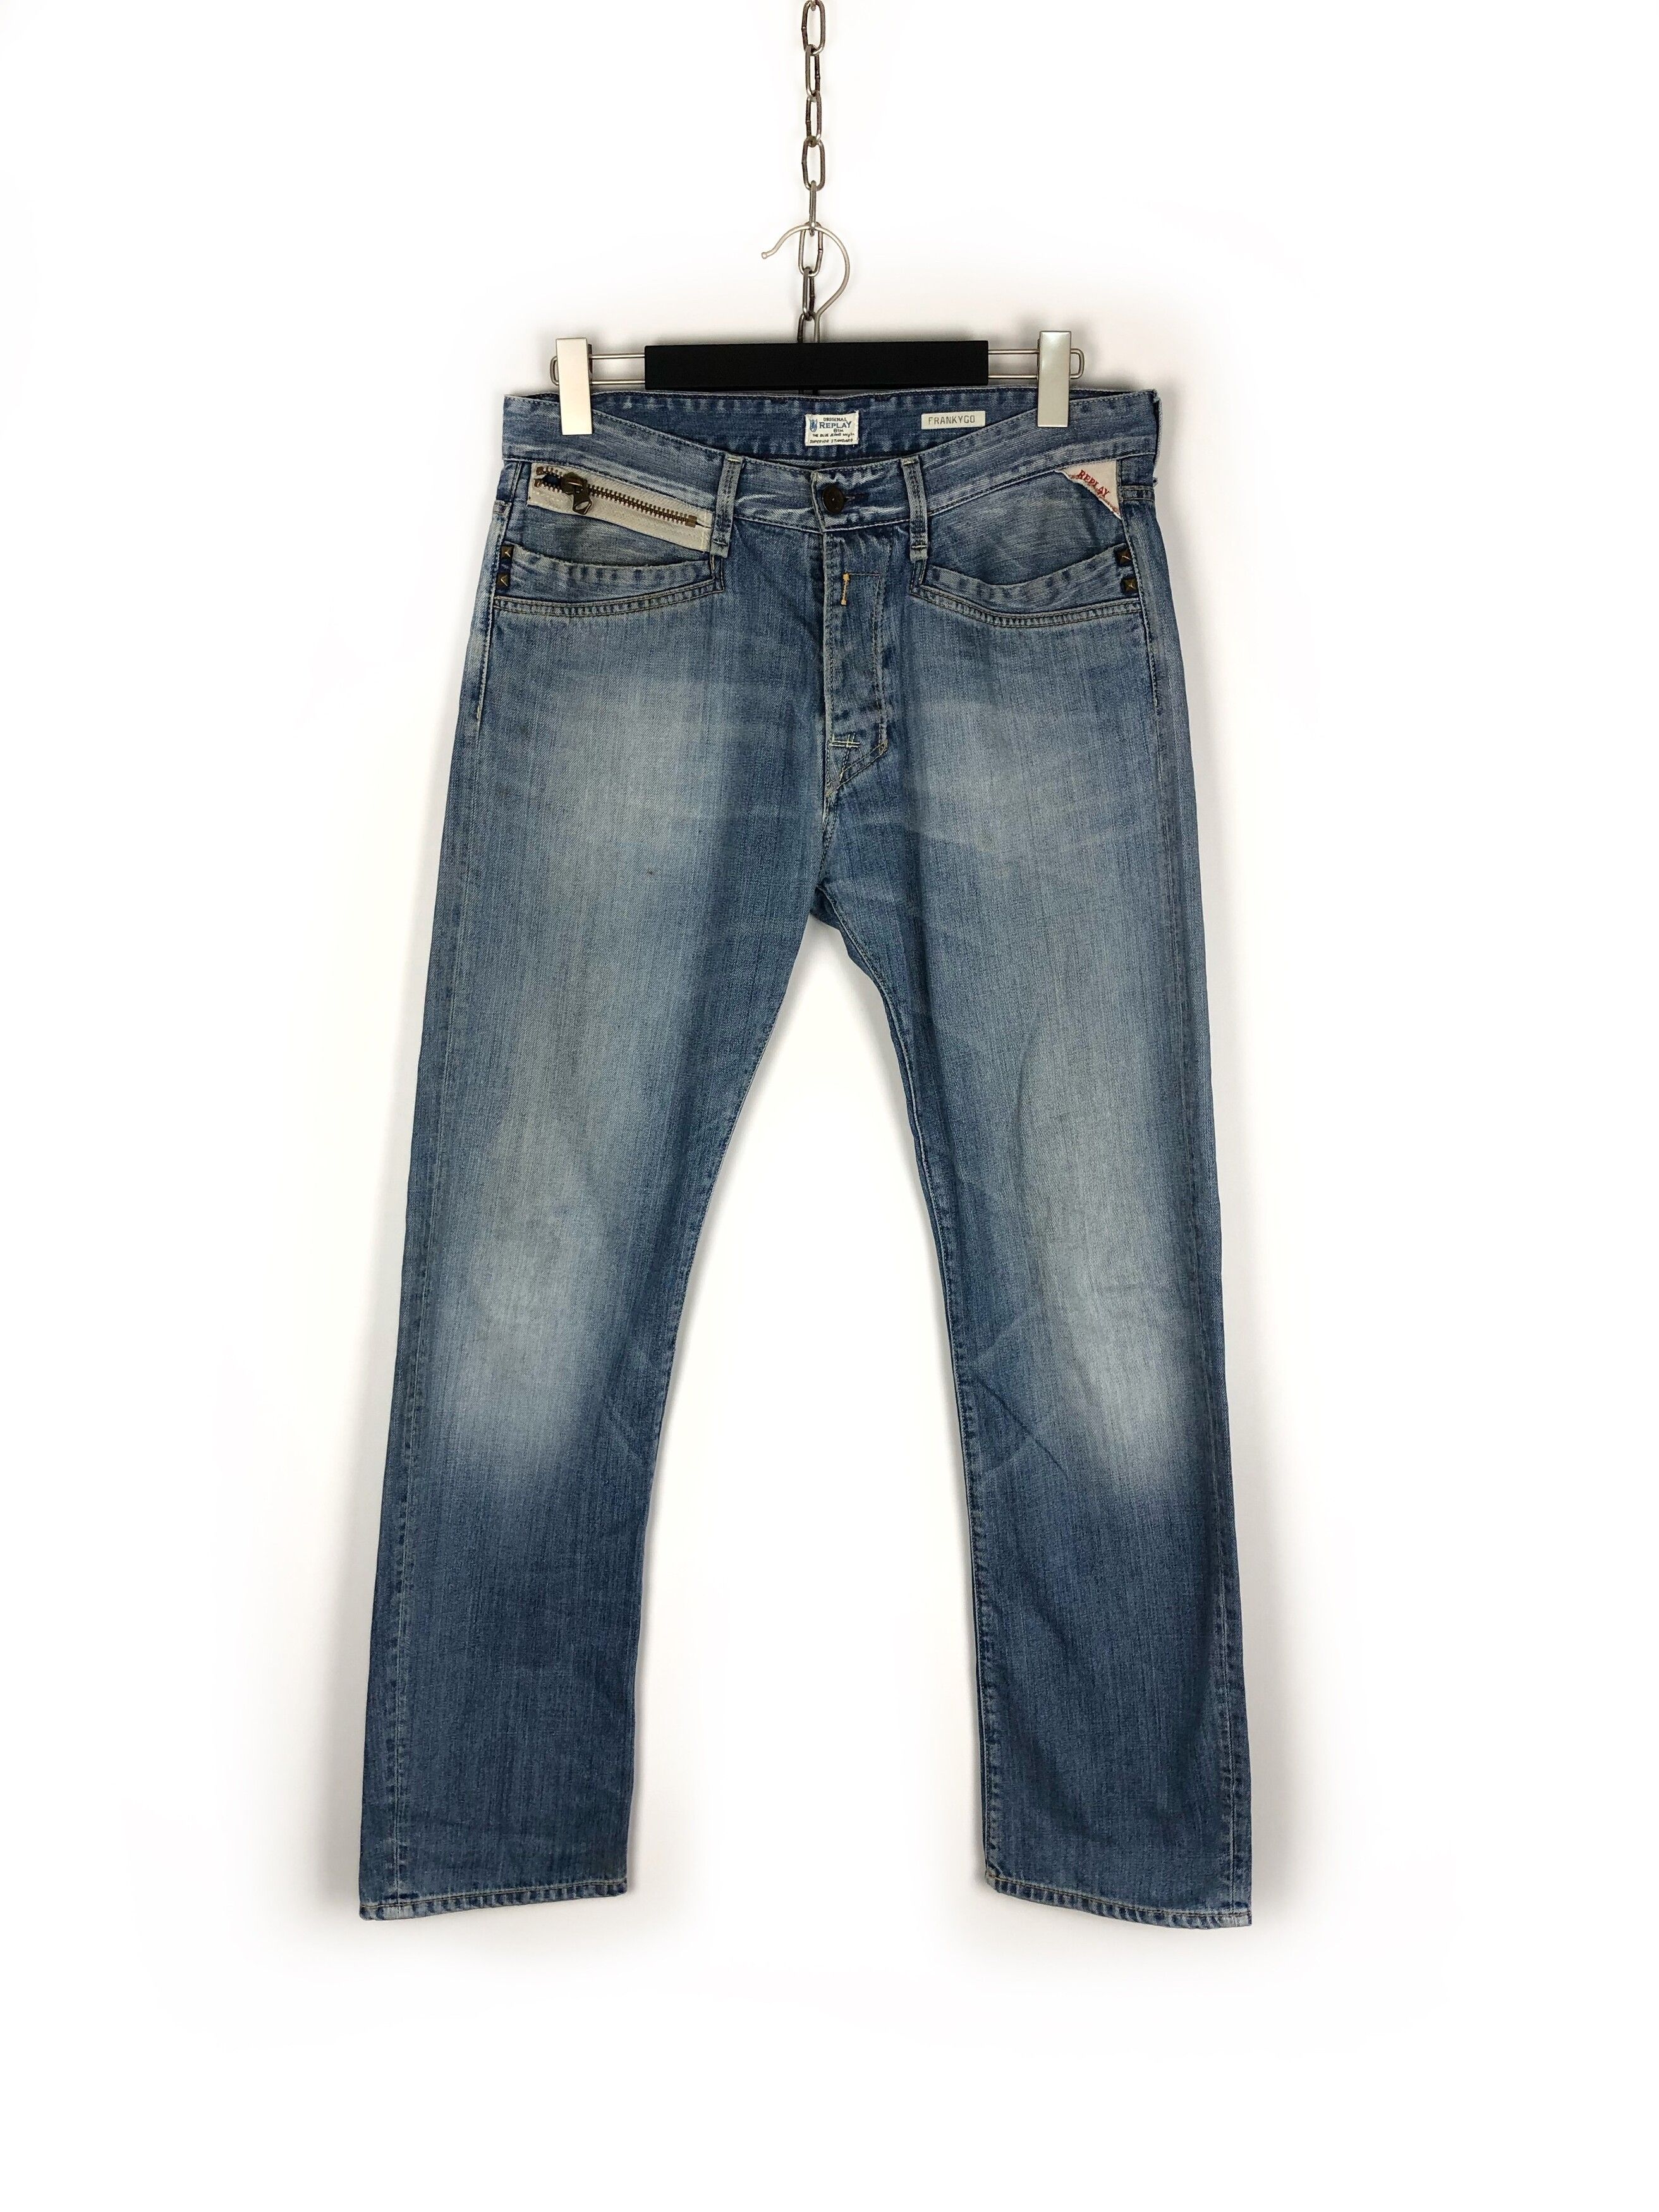 Vintage REPLAY Denim Jeans Pants Franky Vintage Trousers size 32x30 Size US 32 / EU 48 - 1 Preview